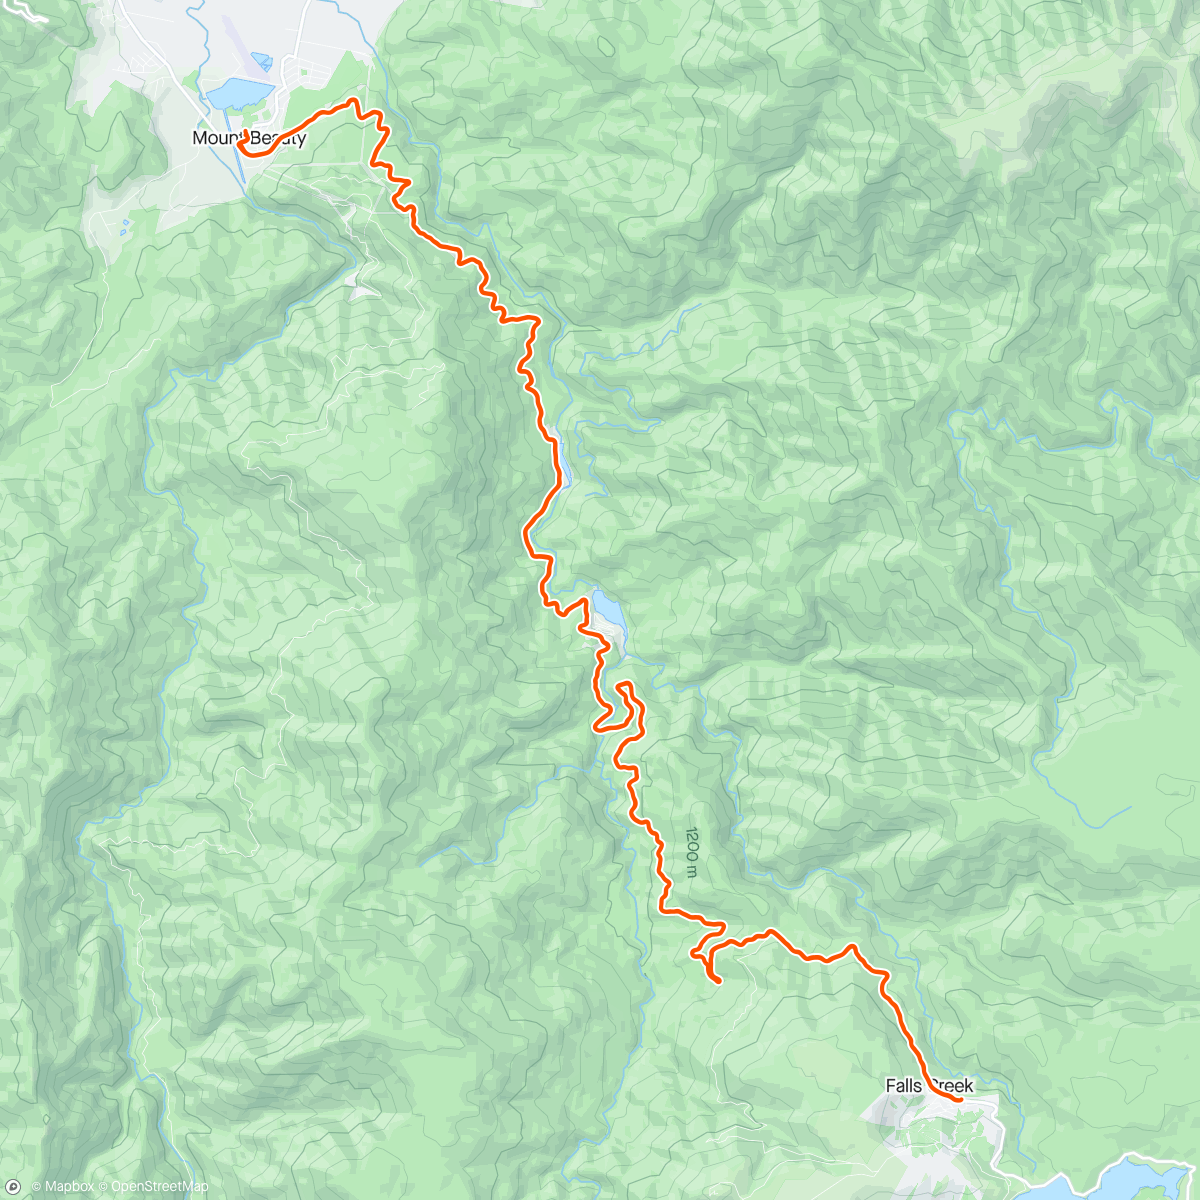 「Falls Creek - final climb in this region」活動的地圖